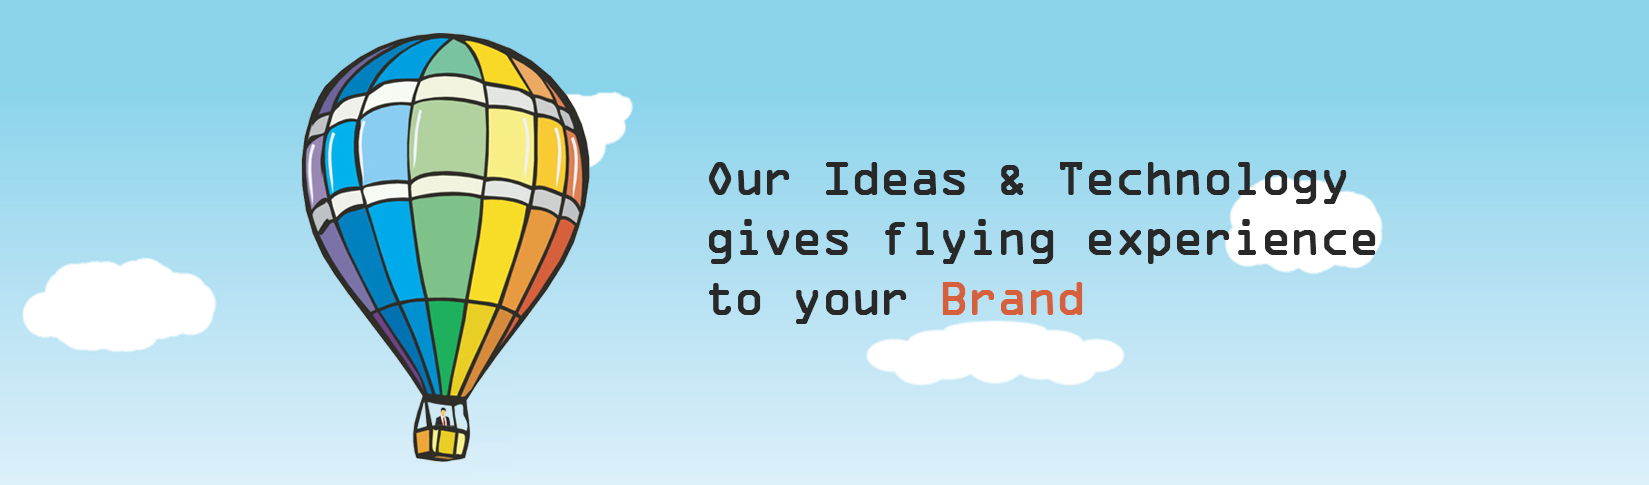 Ideas & techonogy flying experience brand